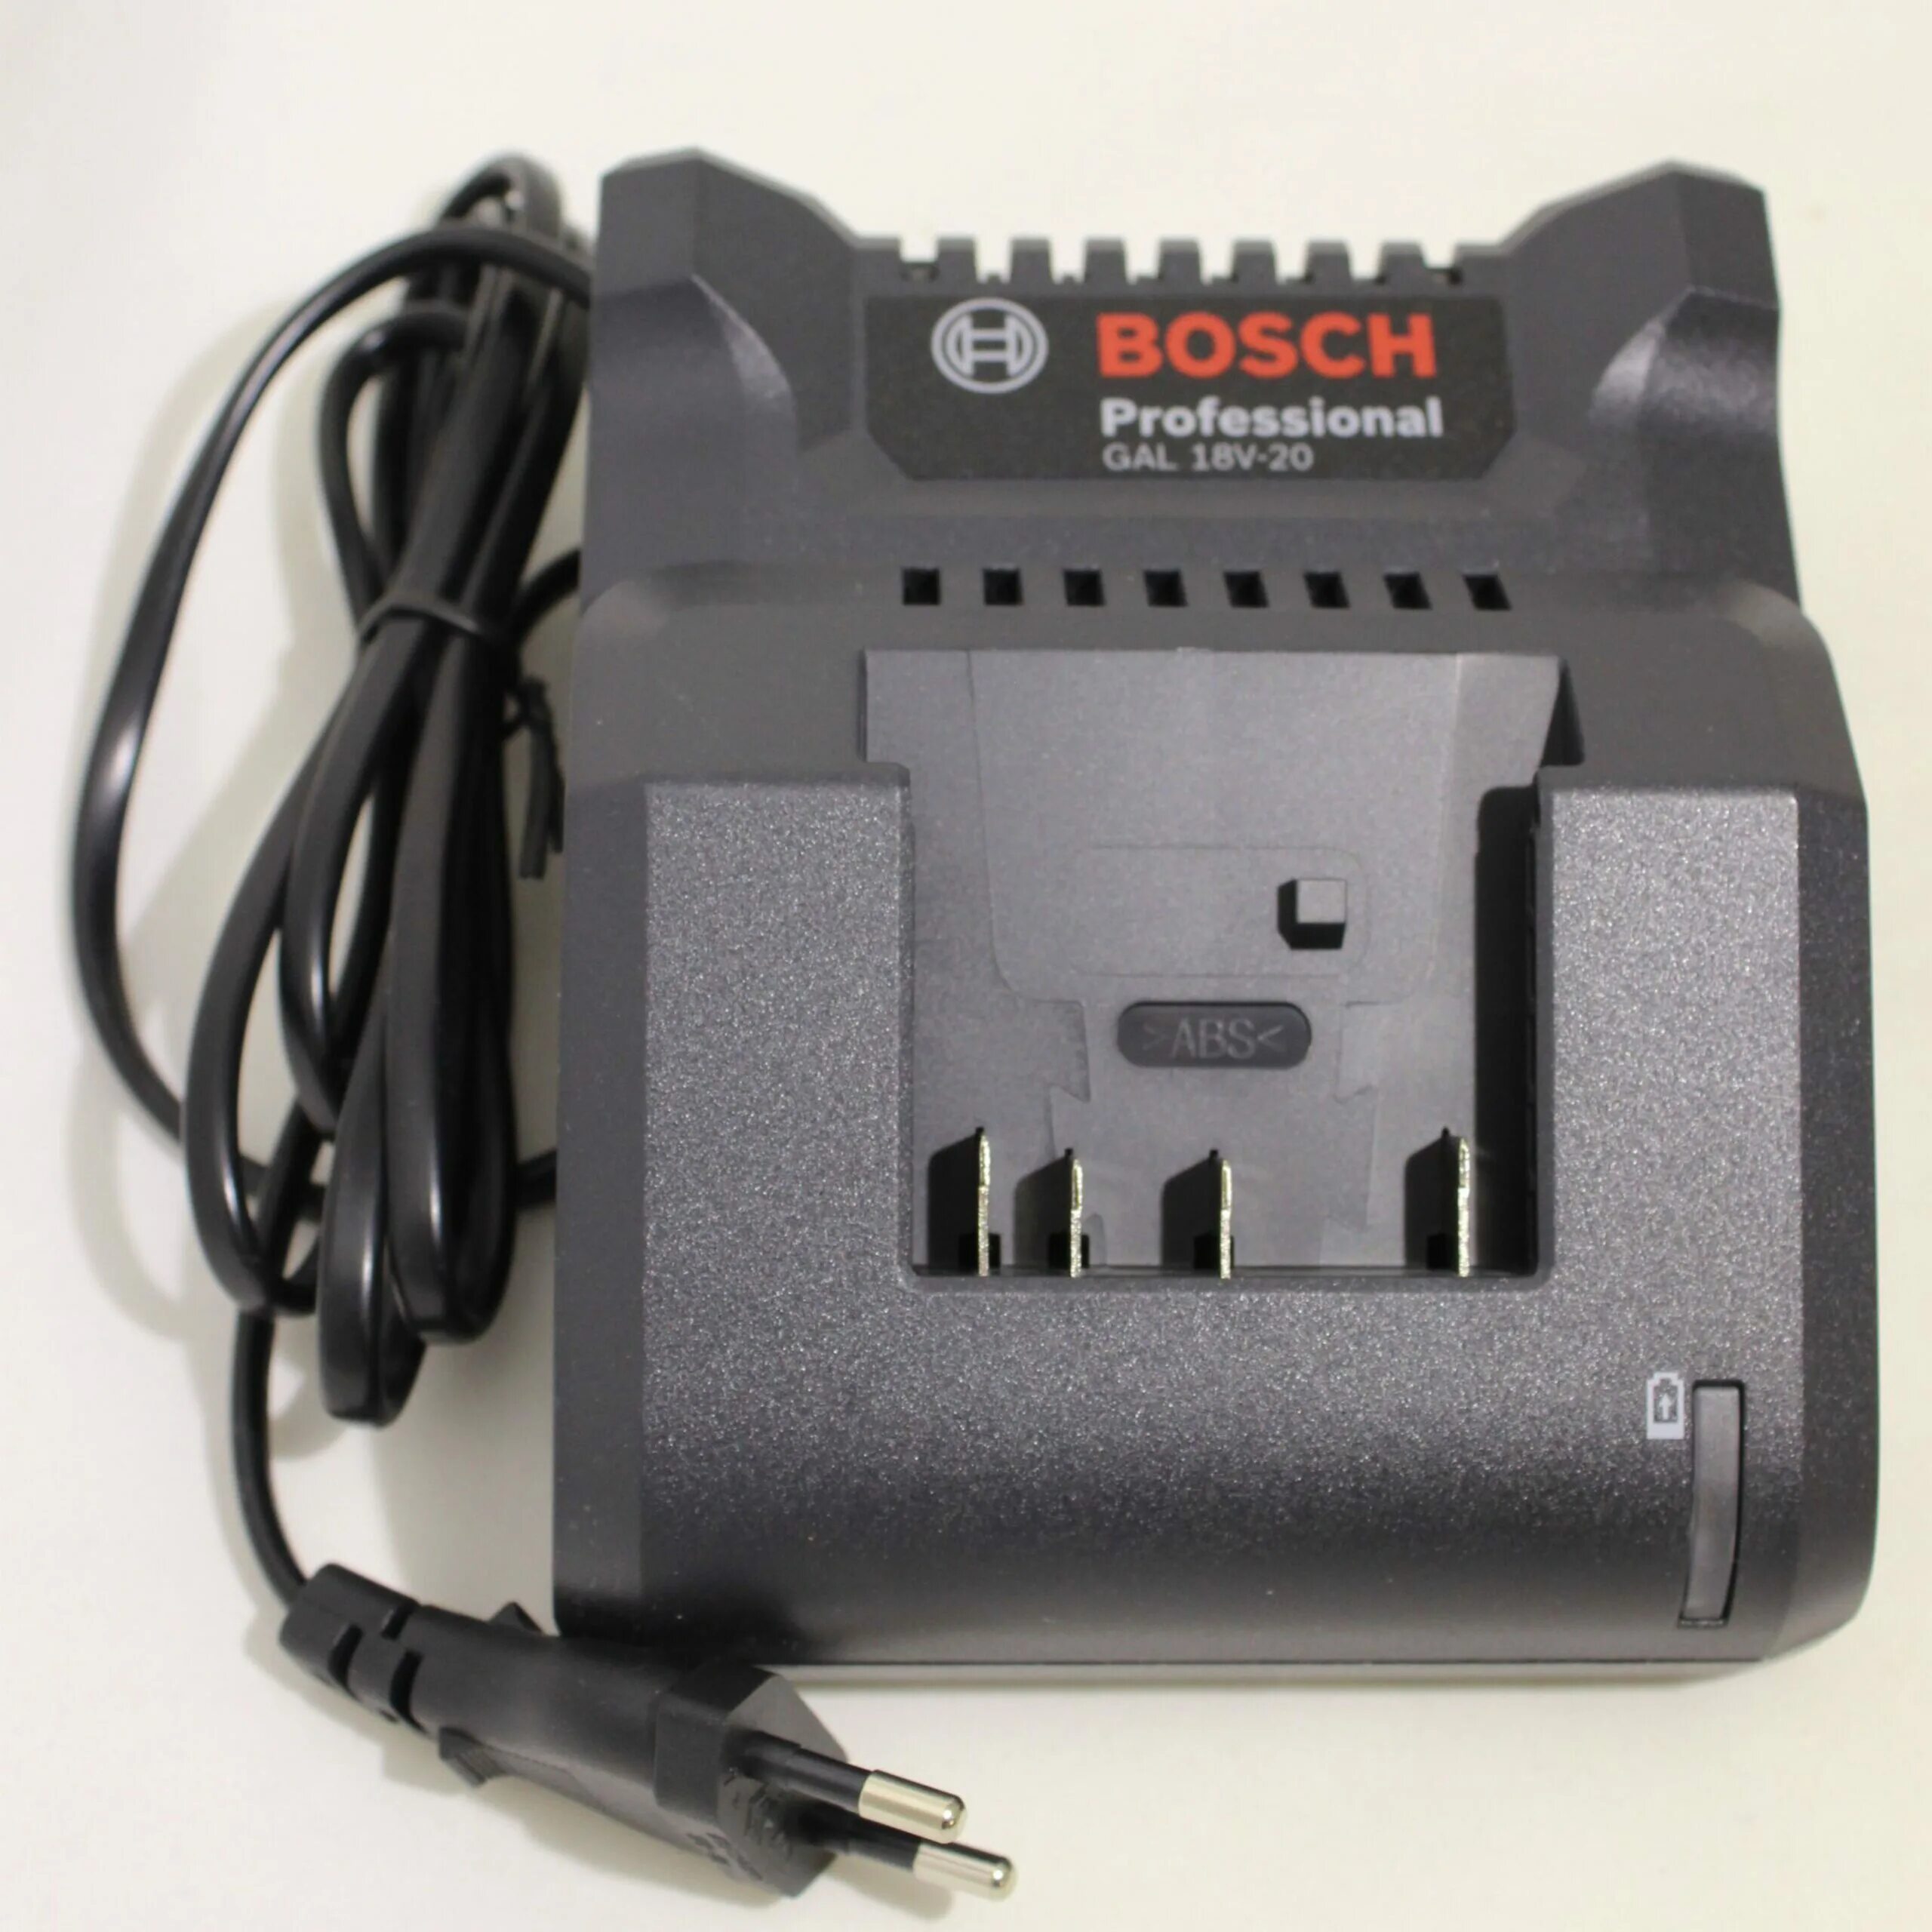 Common 20 pro. Bosch gal 18v-20. Зарядное Bosch professional 18v 40. Gal 18v-20 Bosch зарядное устройство. Зарядка Bosch professional gal 18v-20.